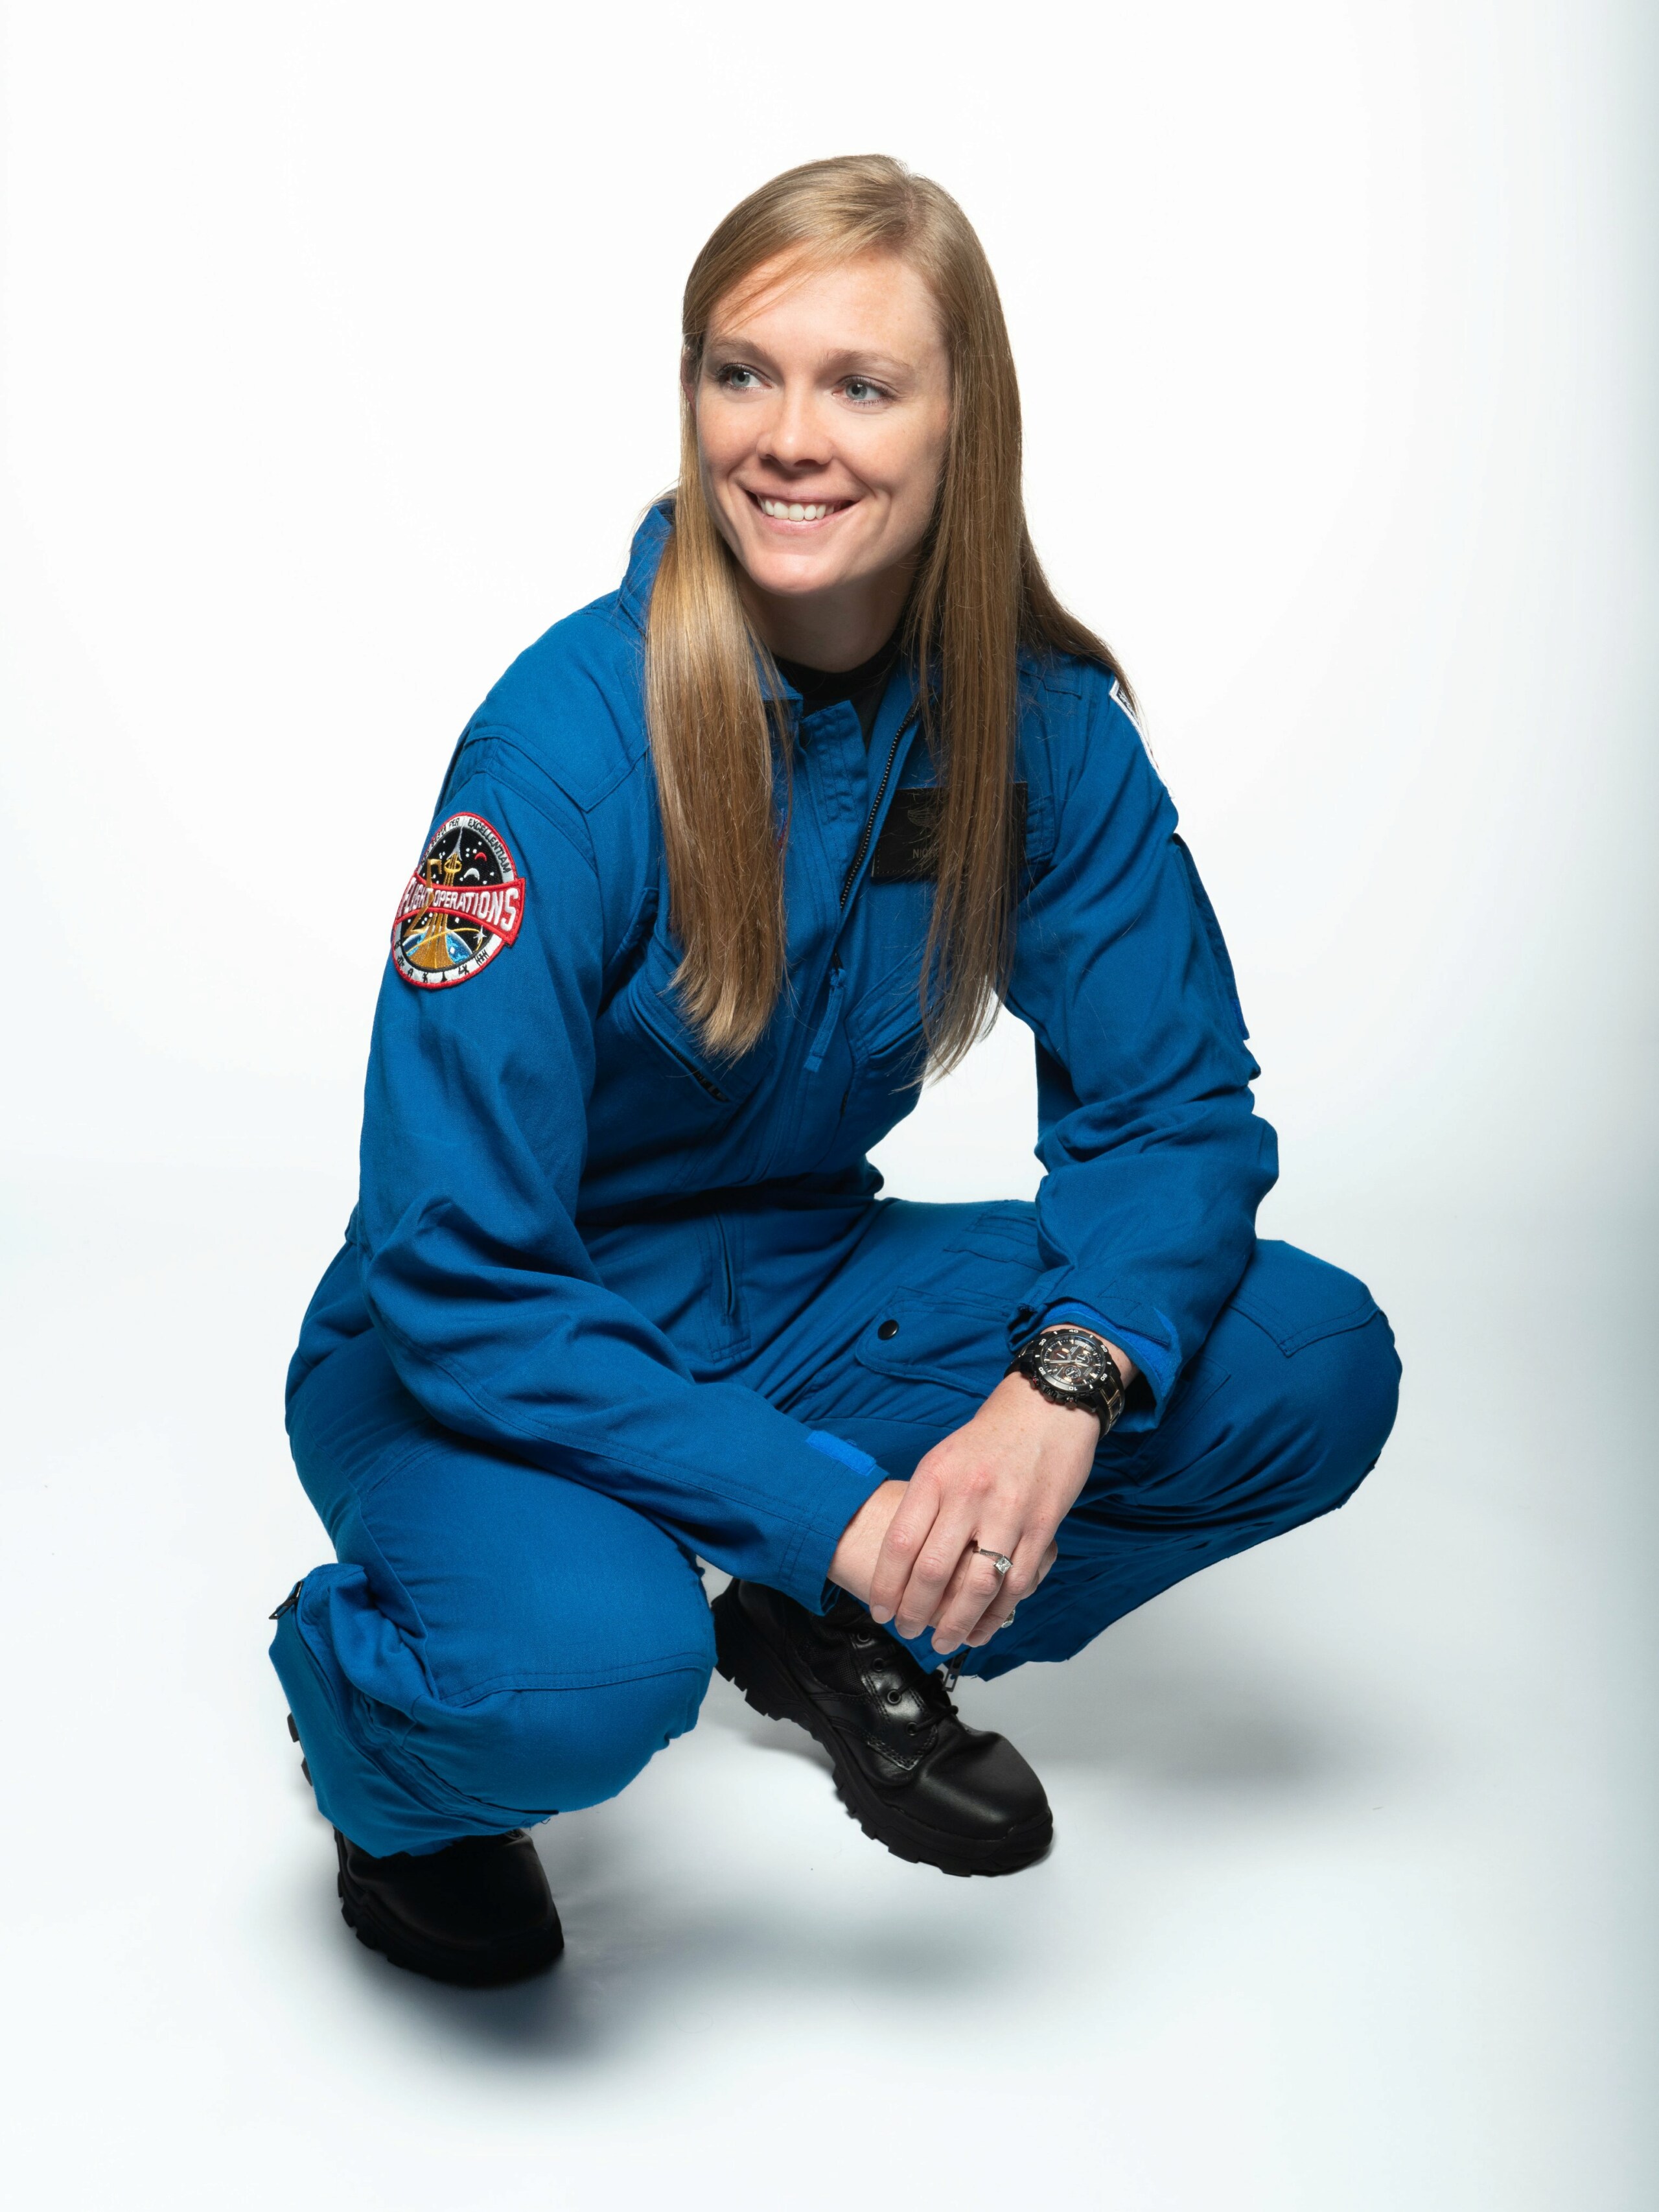 Classe 2021 des candidats astronautes de la NASA 522